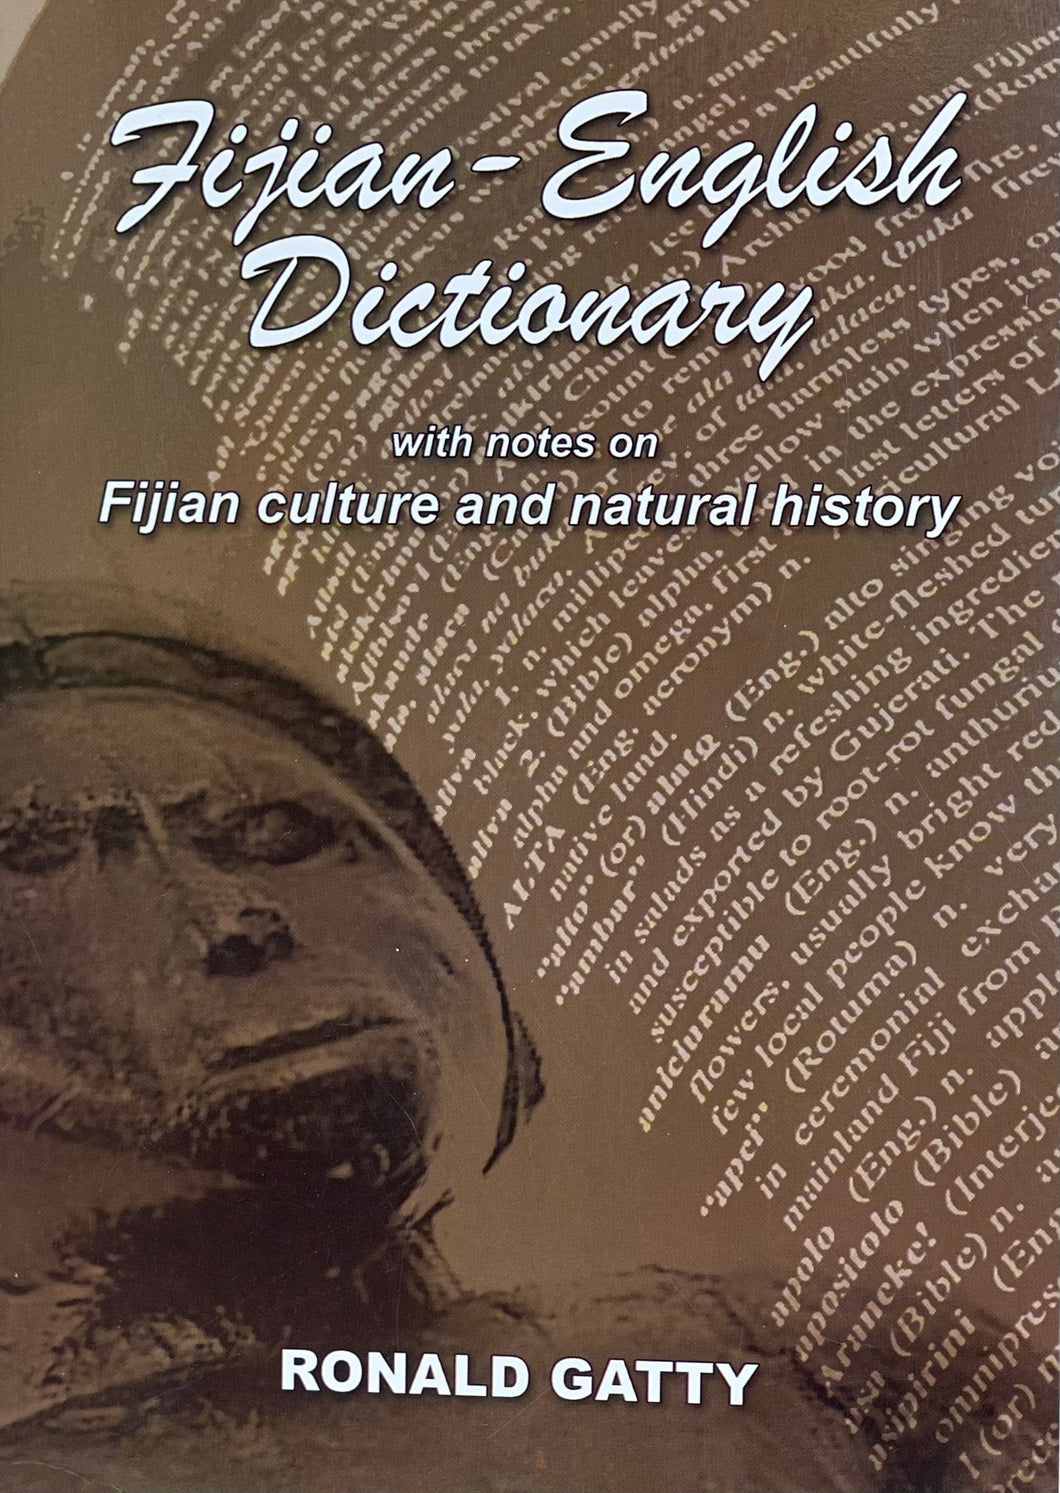 Fijian - English Dictonary, by Ronald Gatty